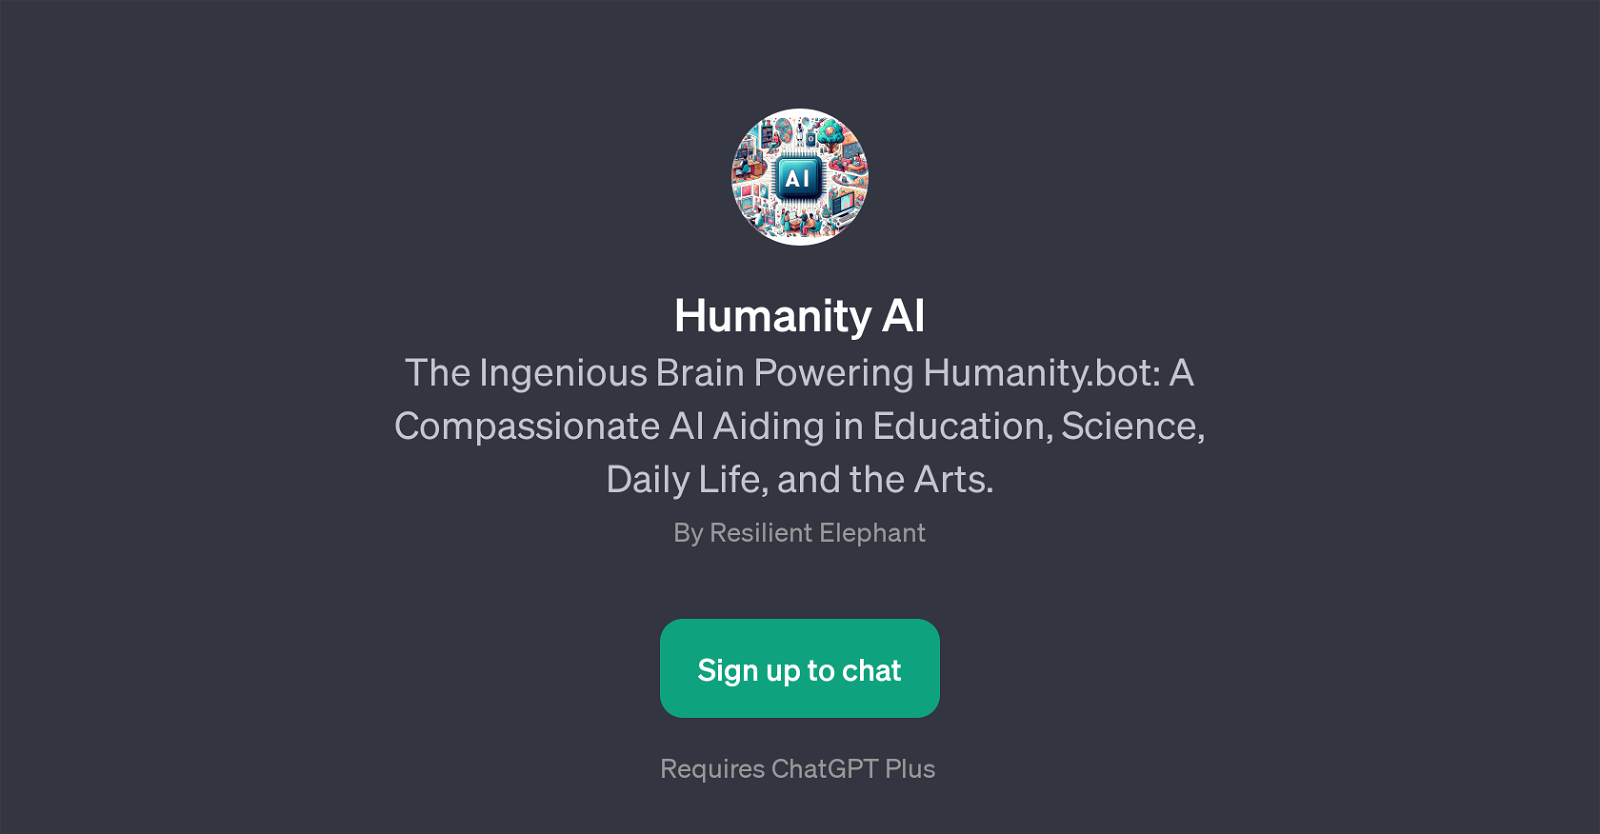 Humanity AI website